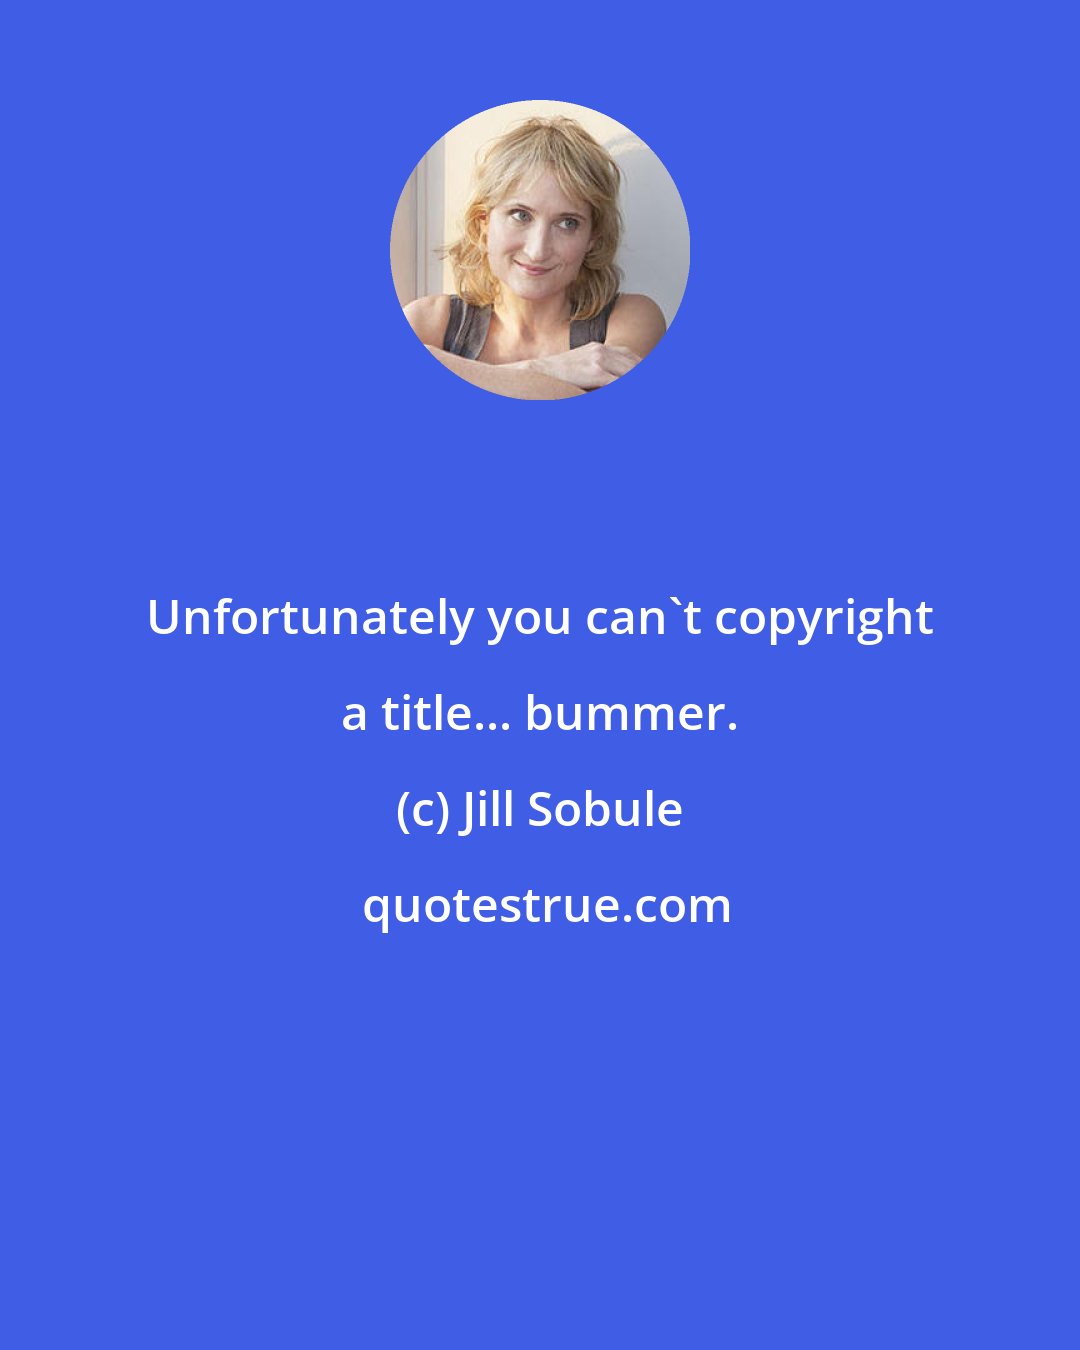 Jill Sobule: Unfortunately you can't copyright a title... bummer.